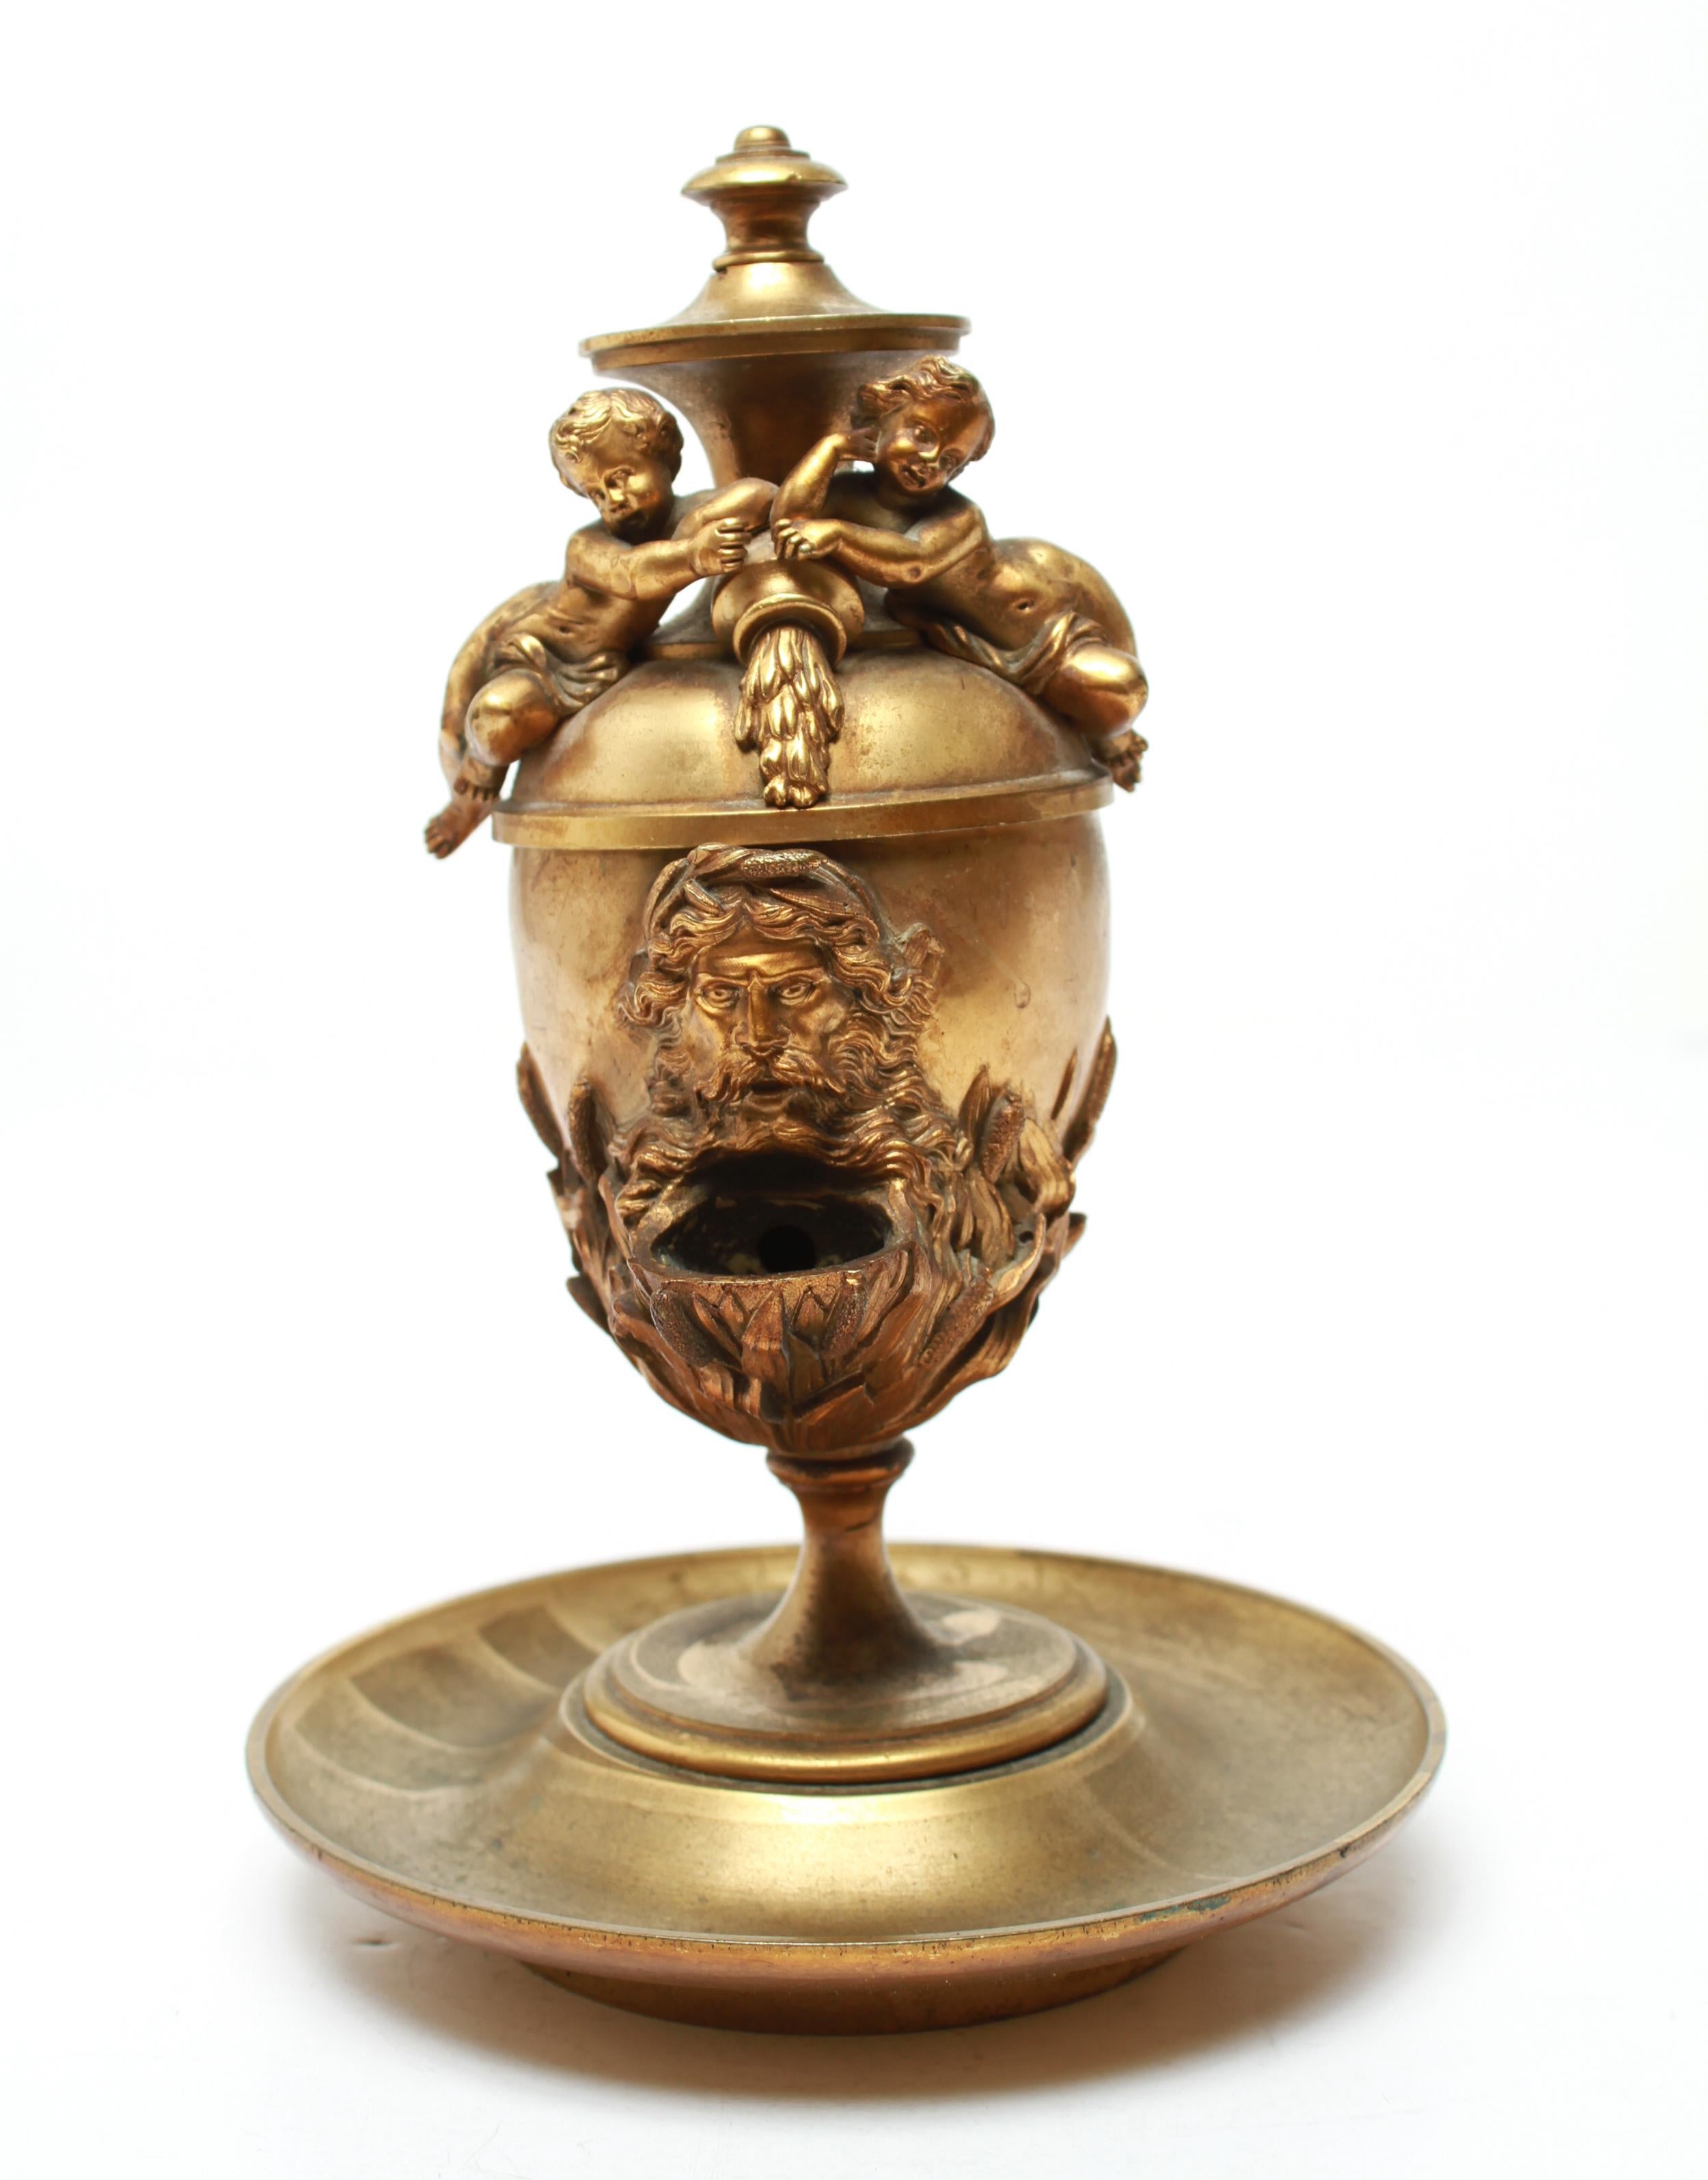 20th Century Neoclassical Revival Gilt Bronze Oil Lamp